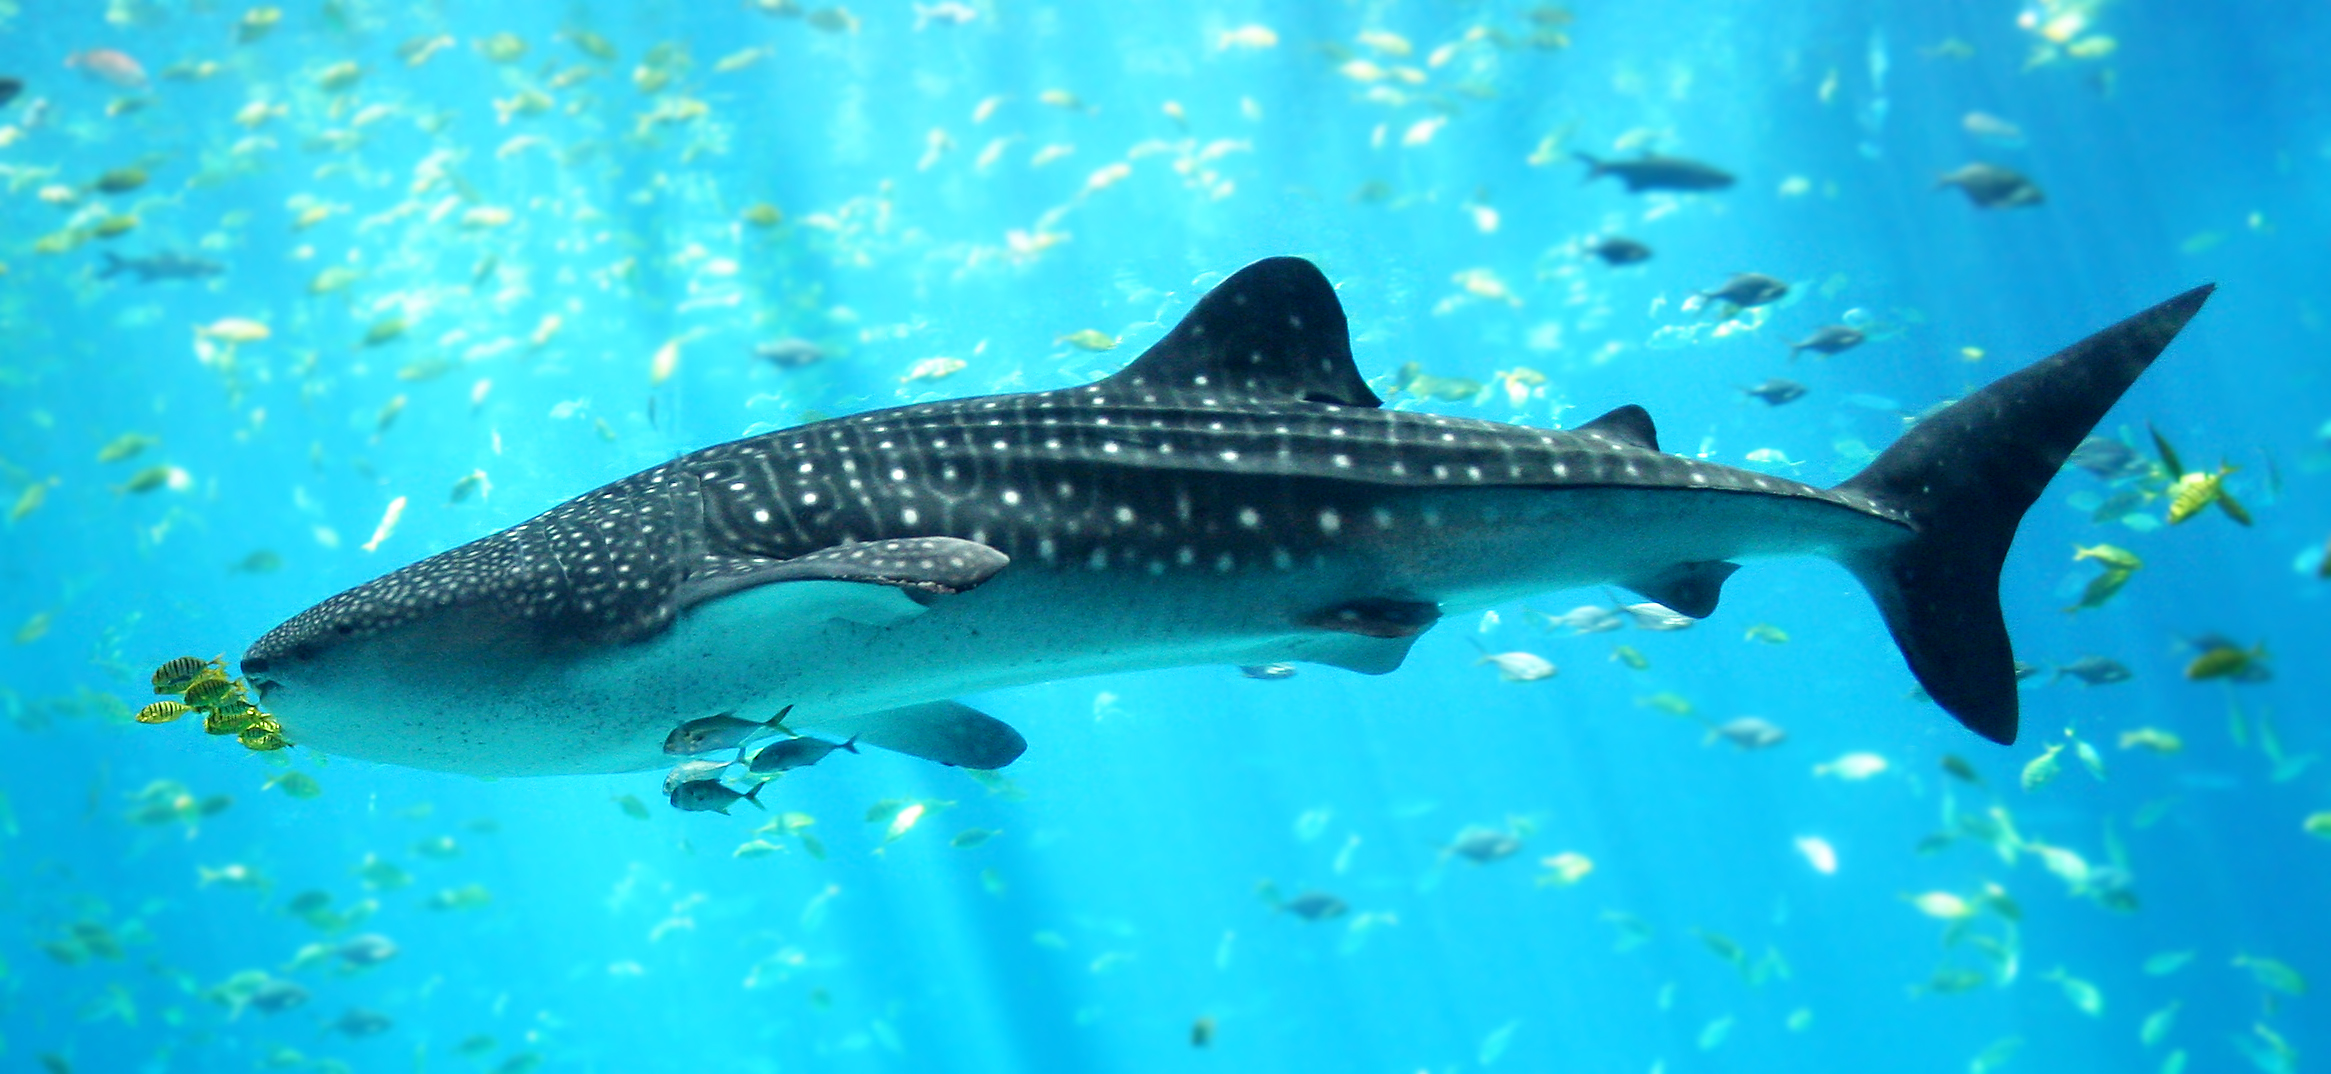 The image displays a whale shark swimming in the Georgia Aquarium.